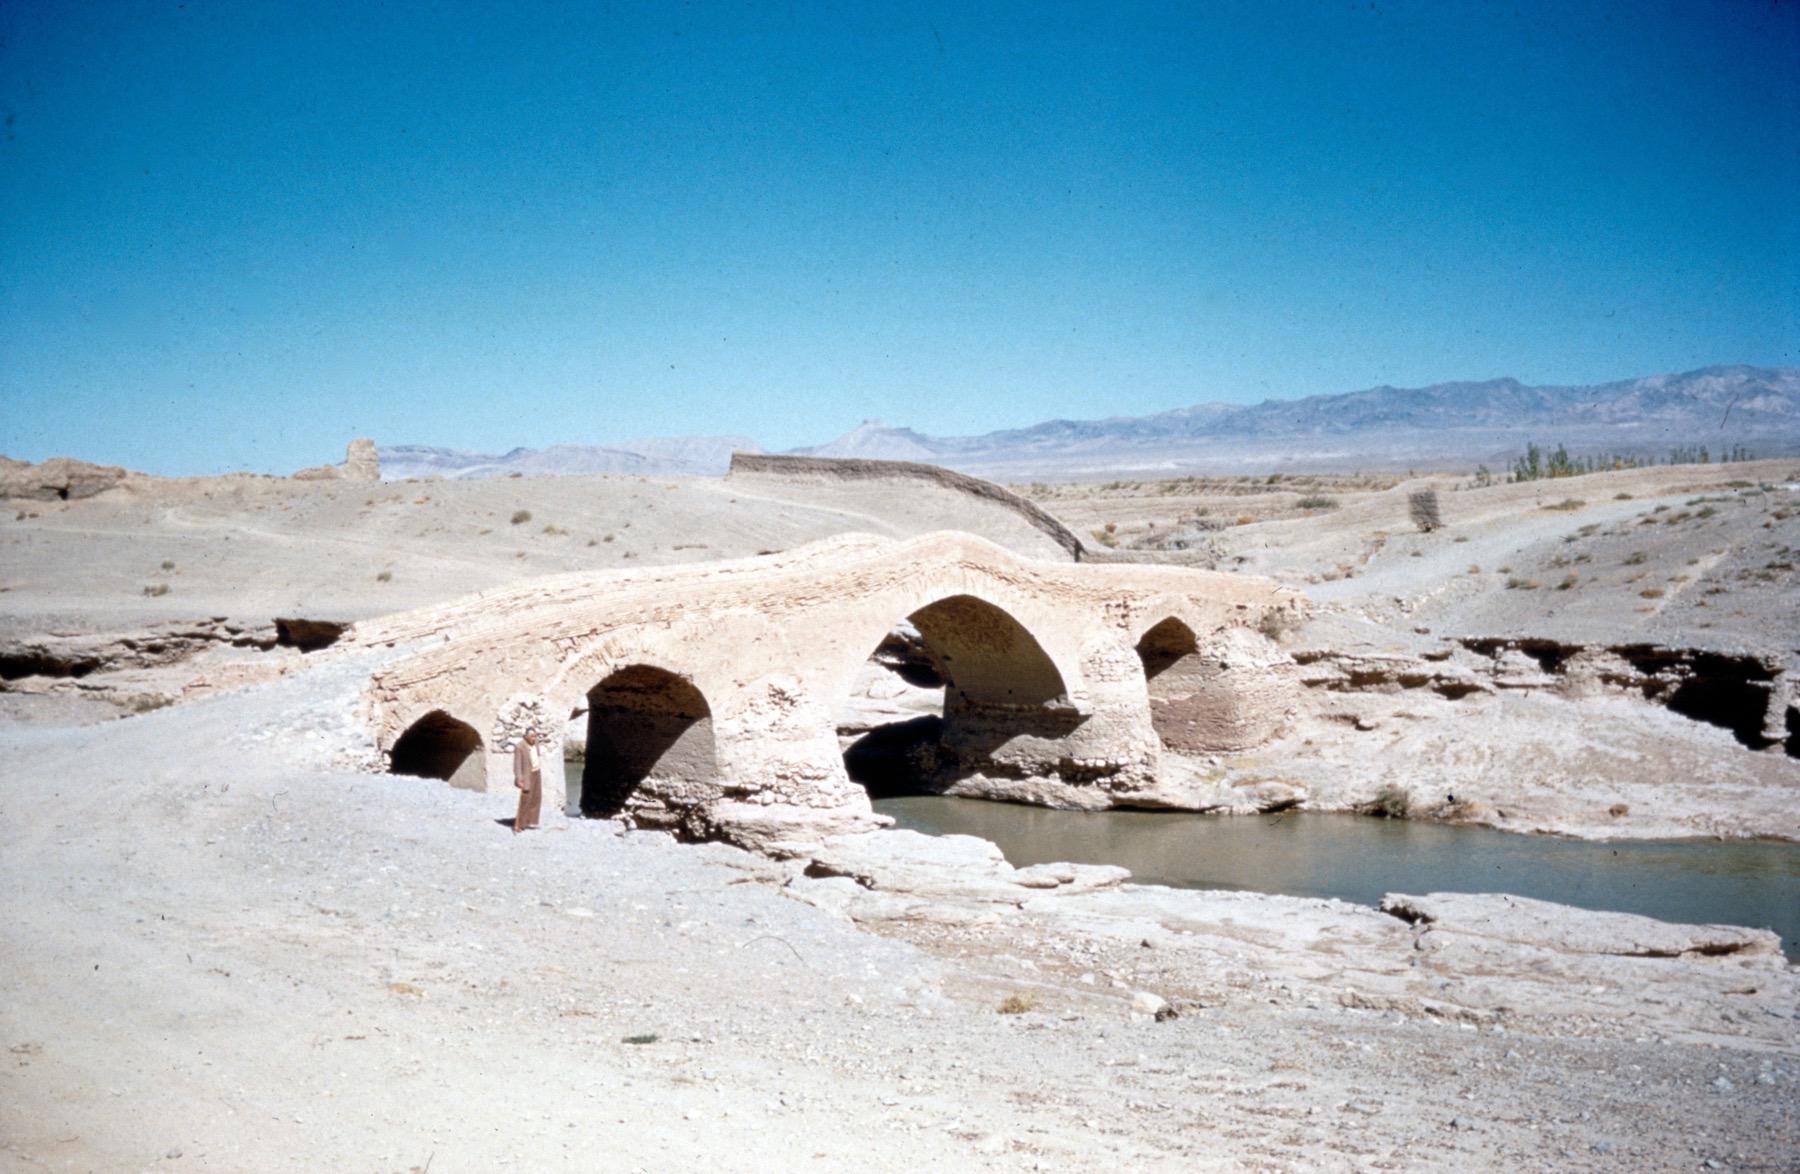 General view of the bridge